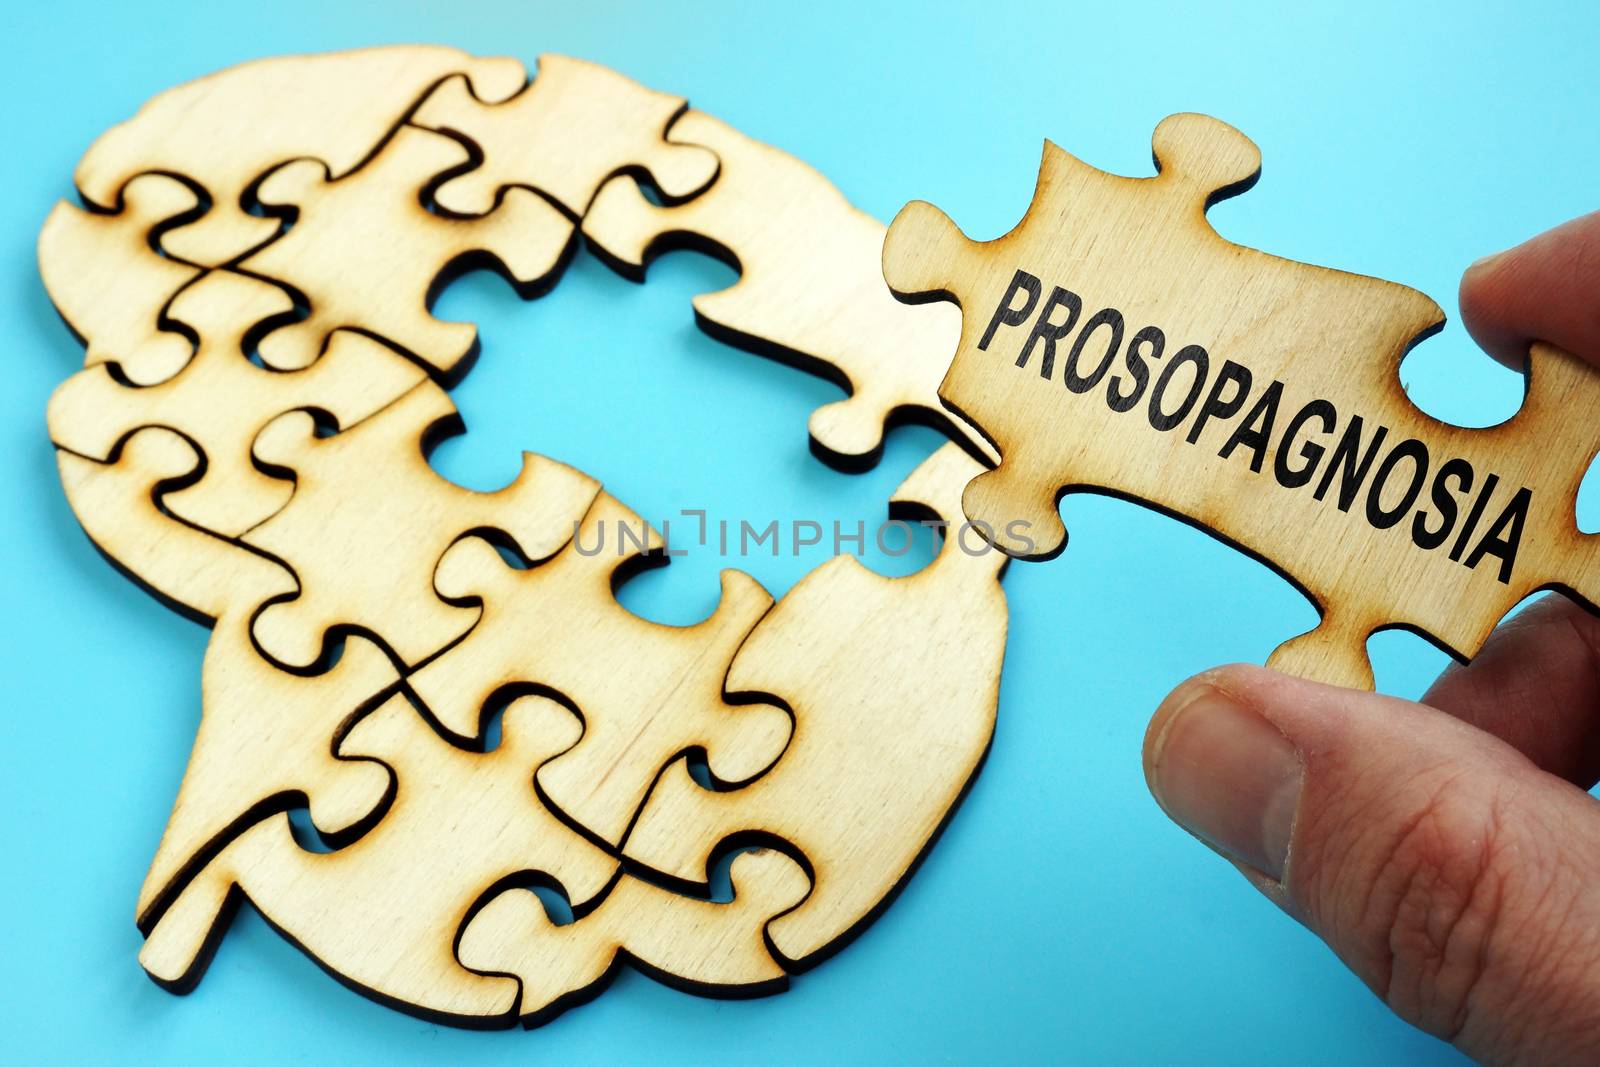 Prosopagnosia written on the piece of puzzle.